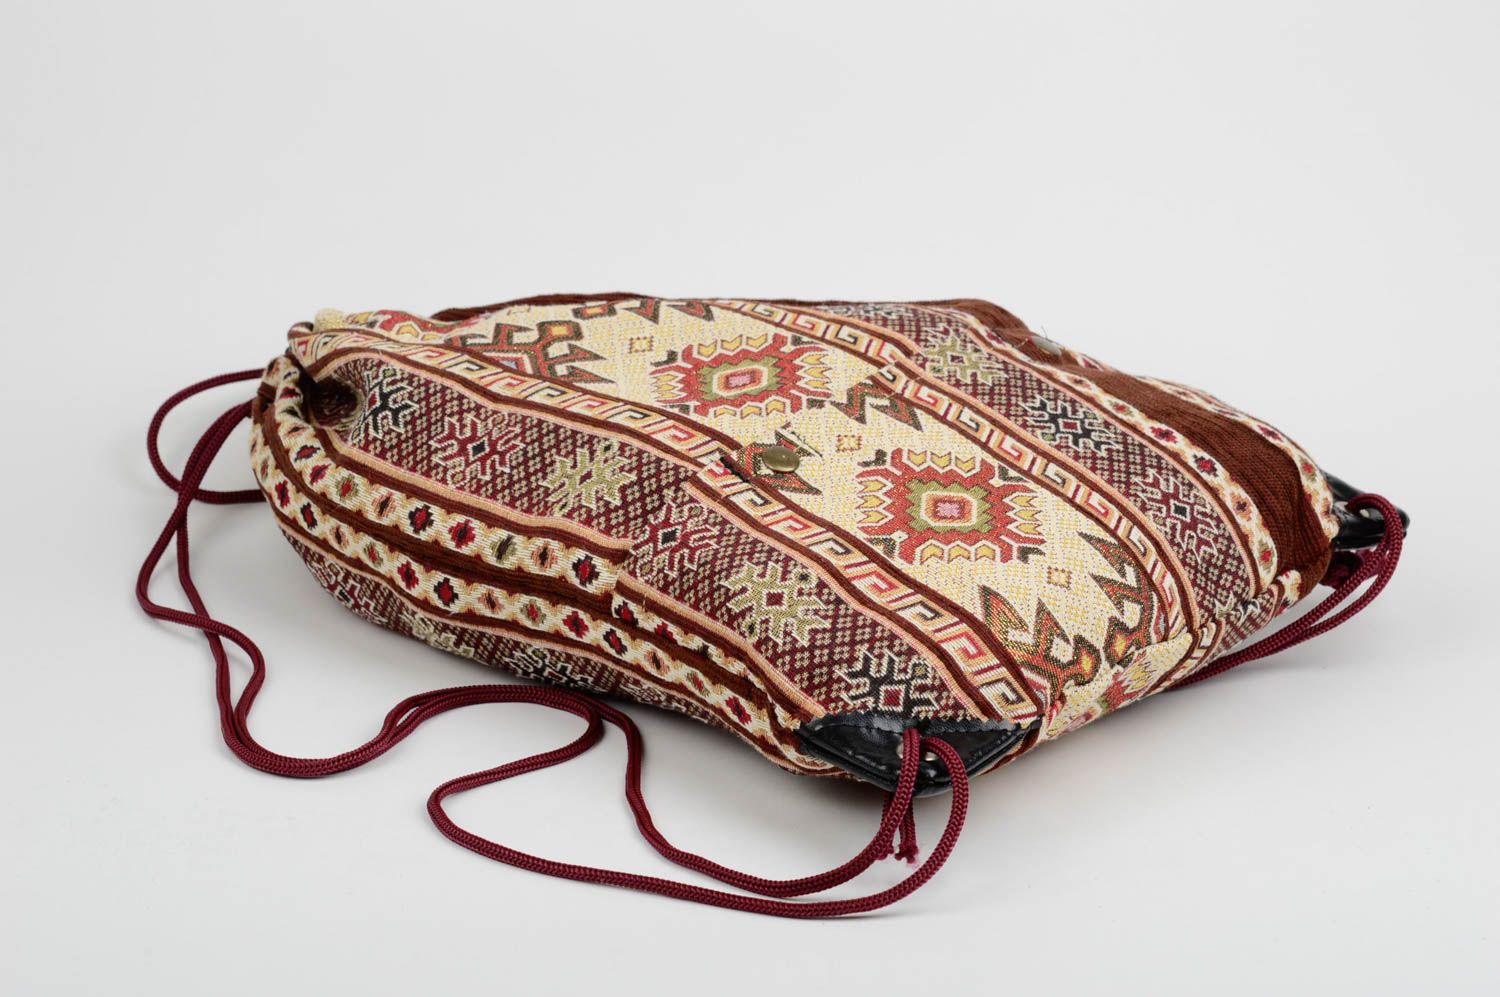 Handmade bag for school unusual backpack designer packback gift ideas photo 3